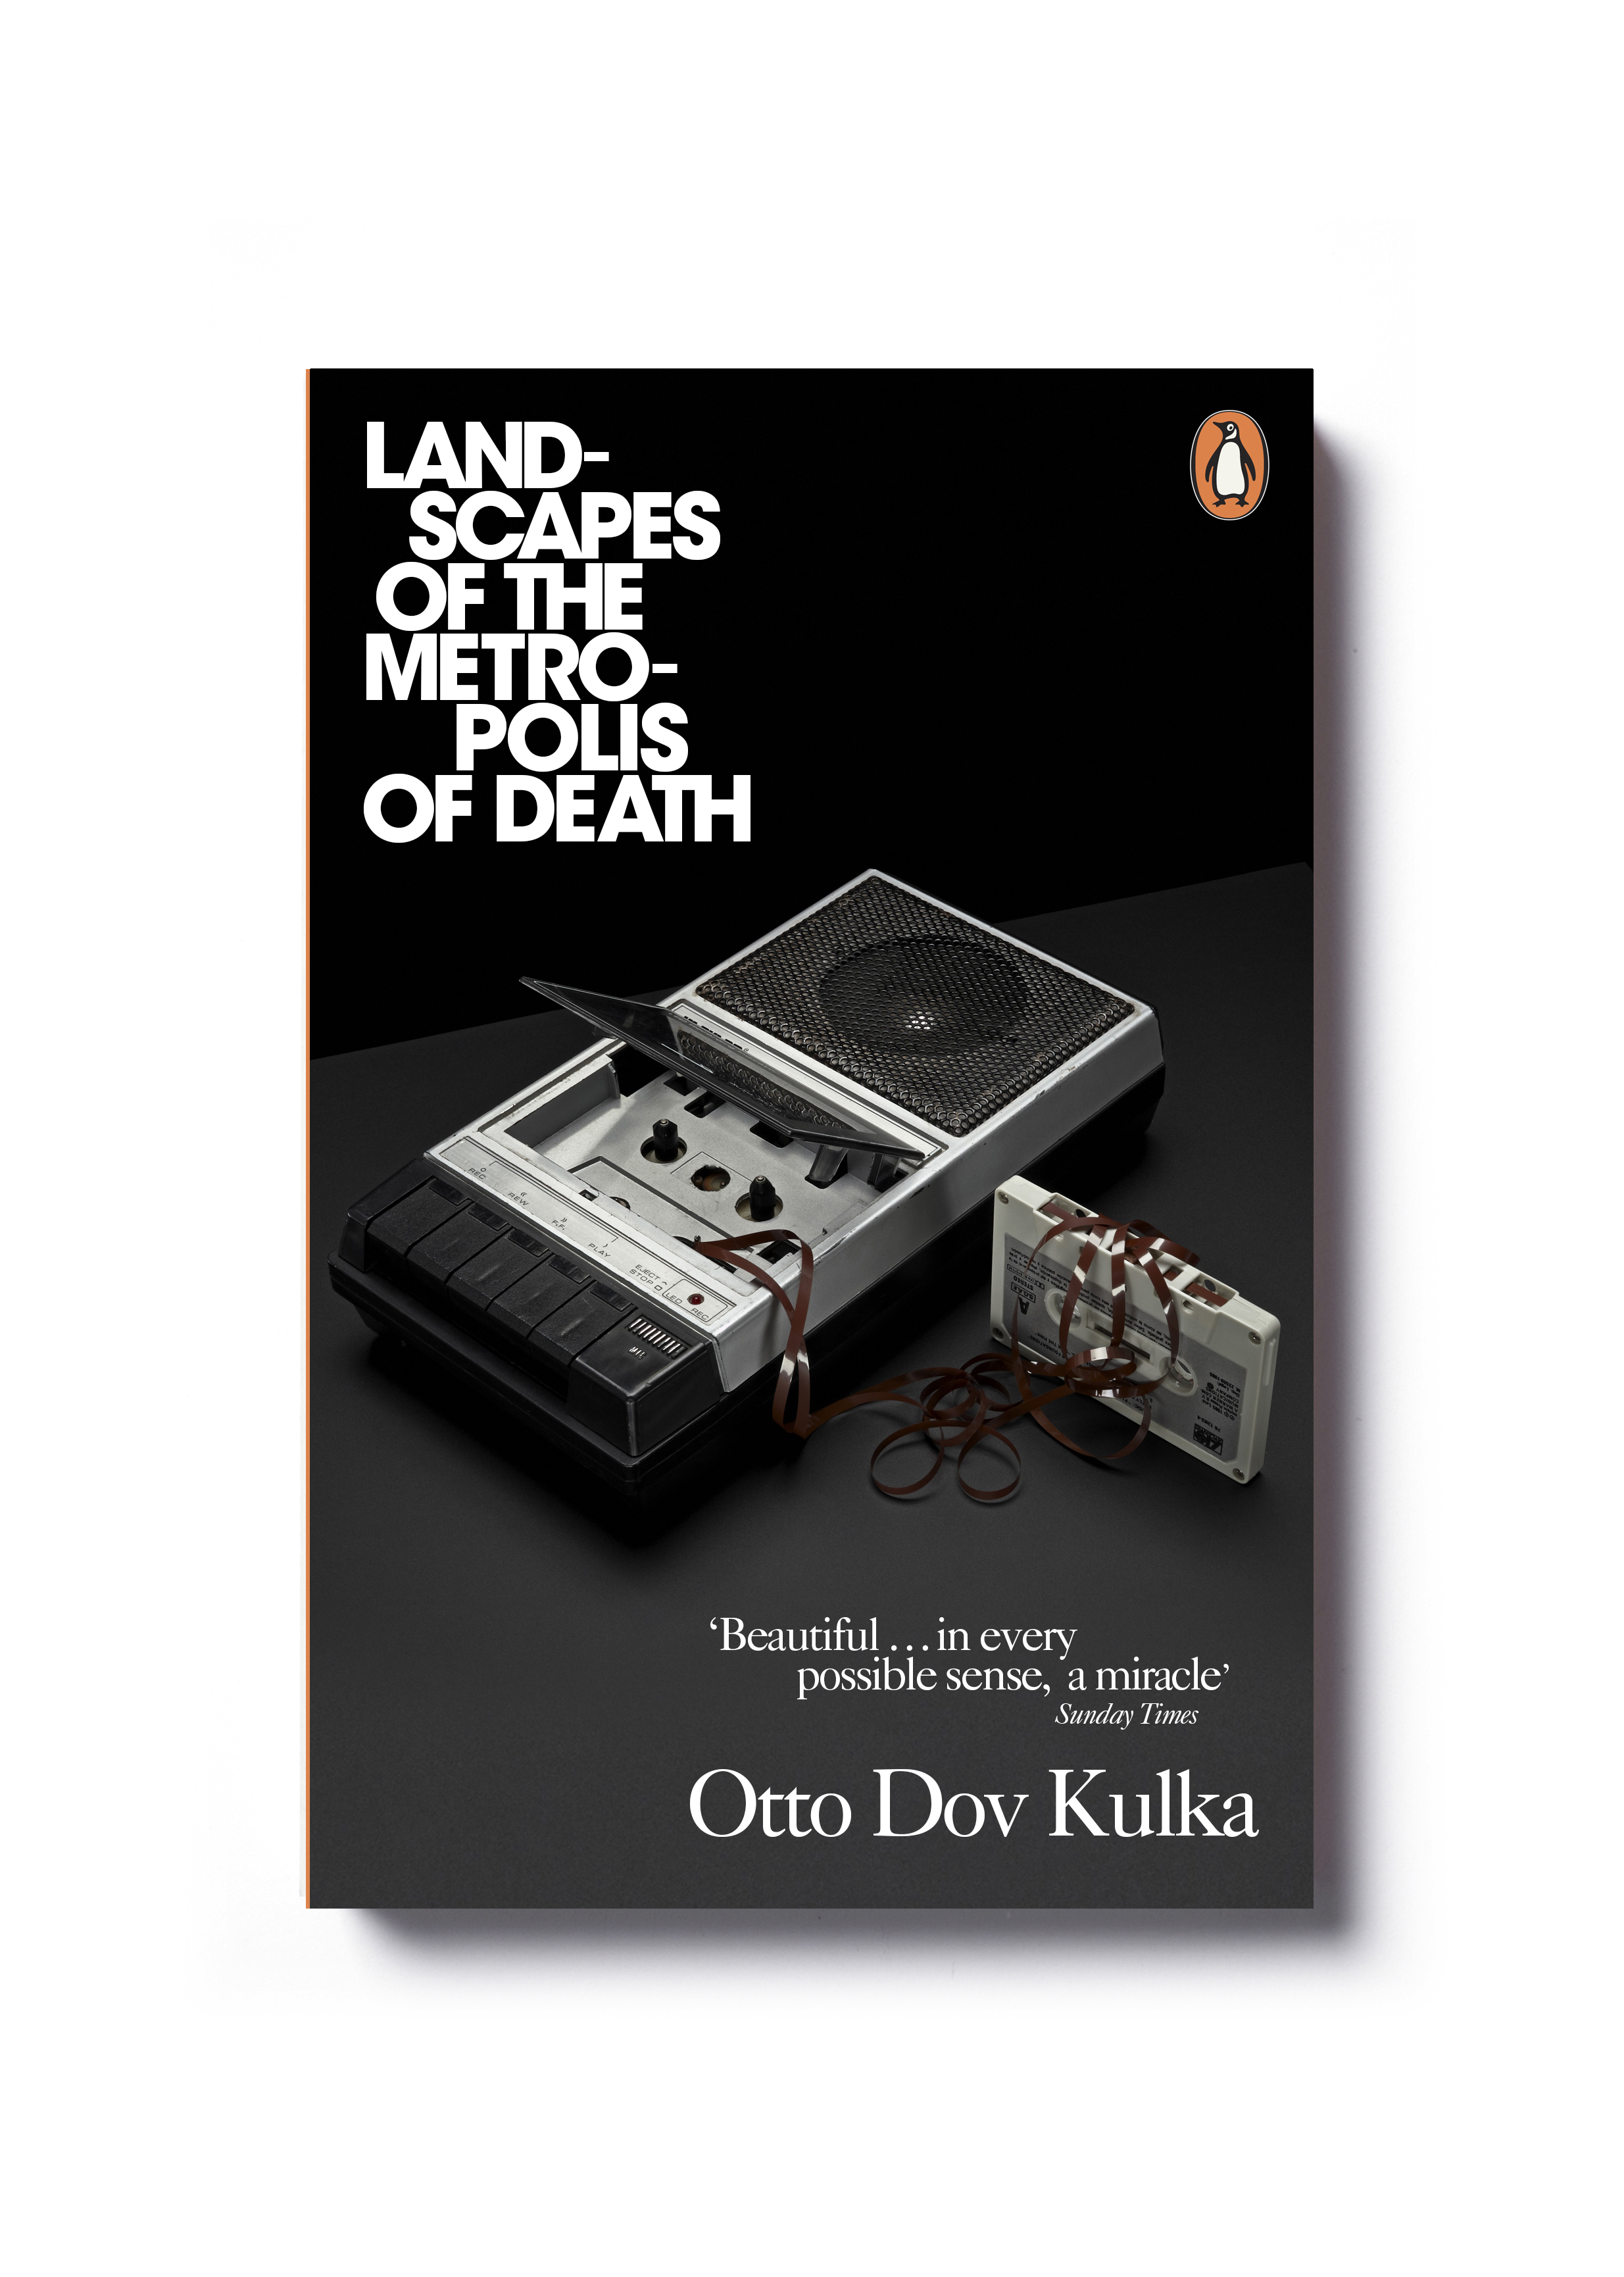  Landscapes of the Metropolis of Death by Otto Dov Kulka - Design: Jim Stoddart  